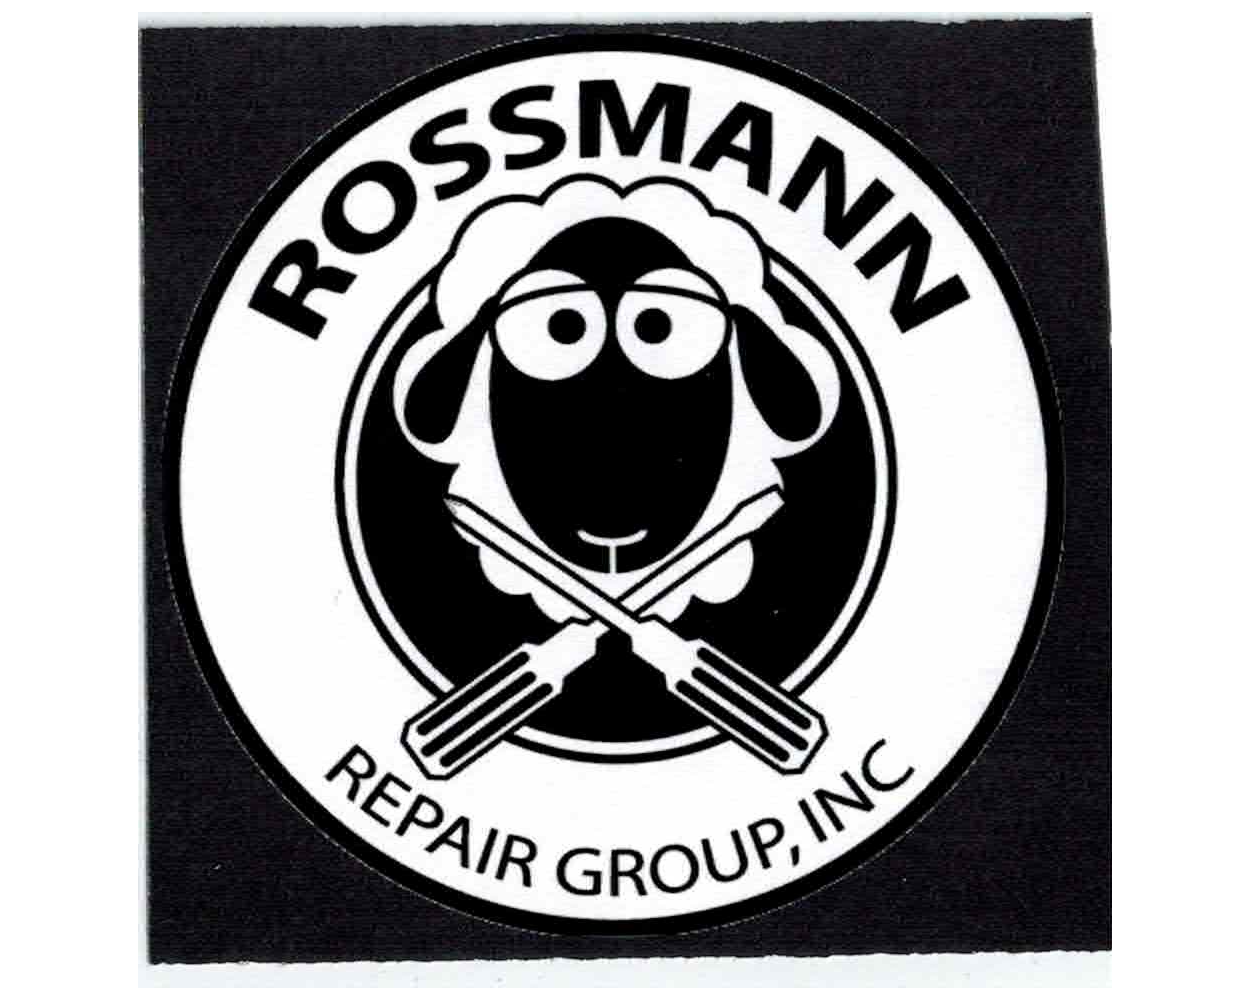 Why Use Us? - Rossmann Repair Group